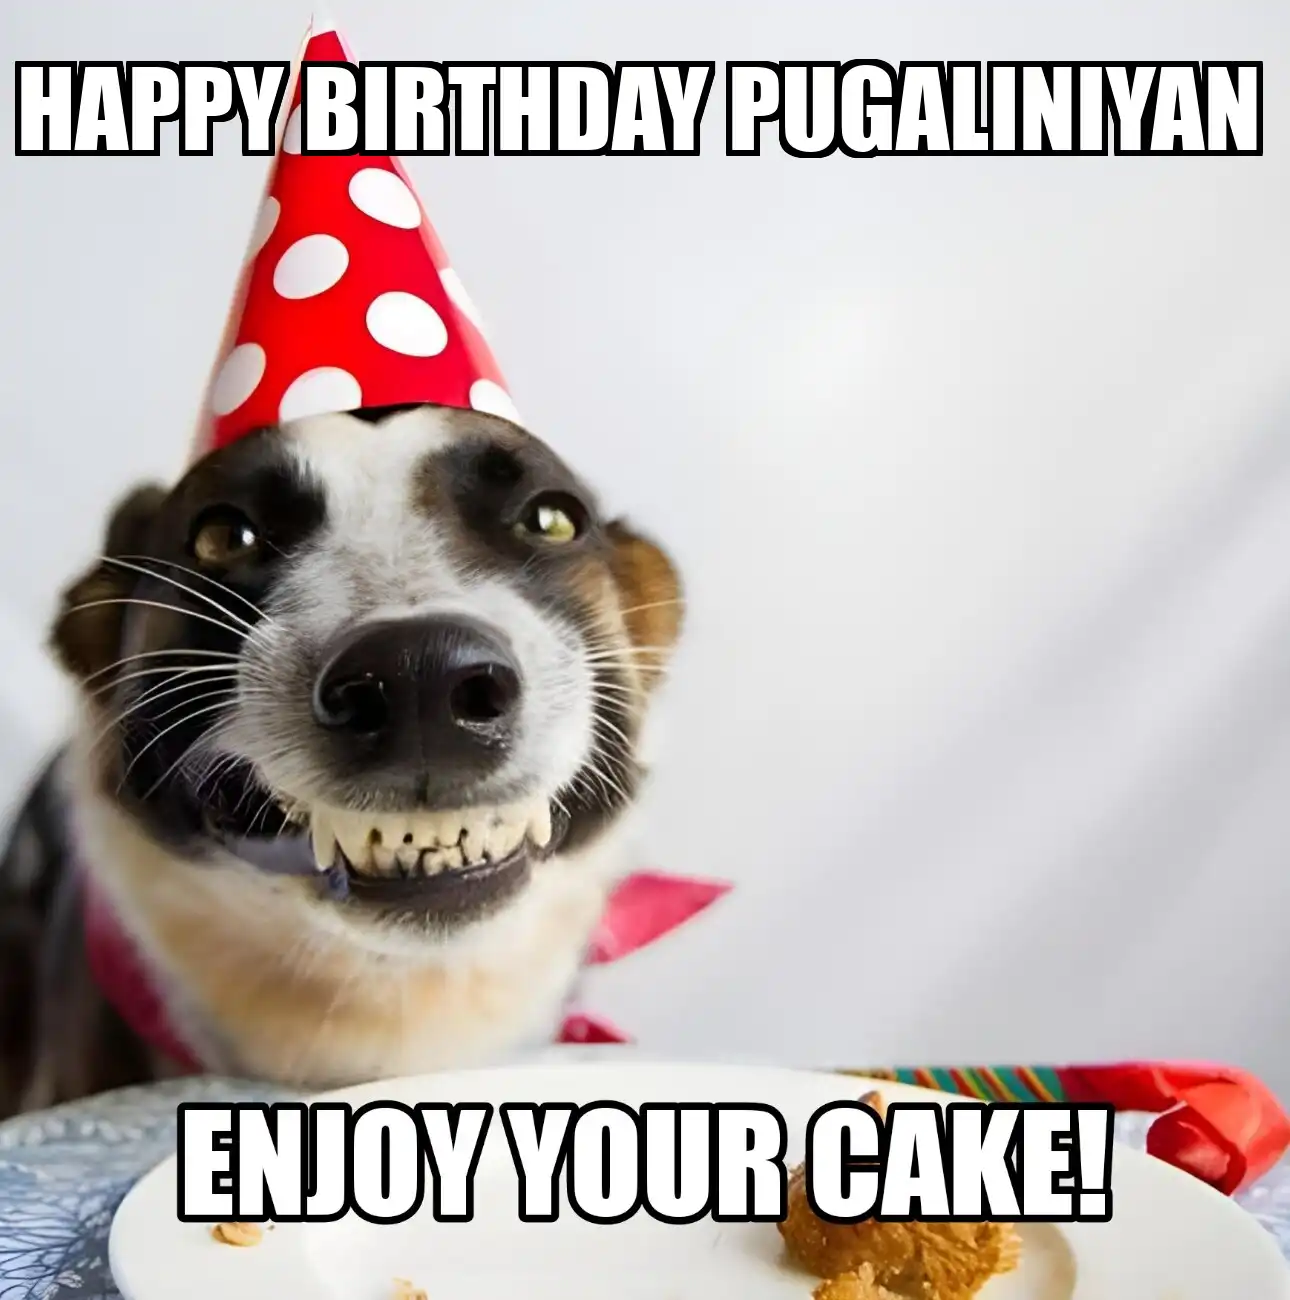 Happy Birthday Pugaliniyan Enjoy Your Cake Dog Meme